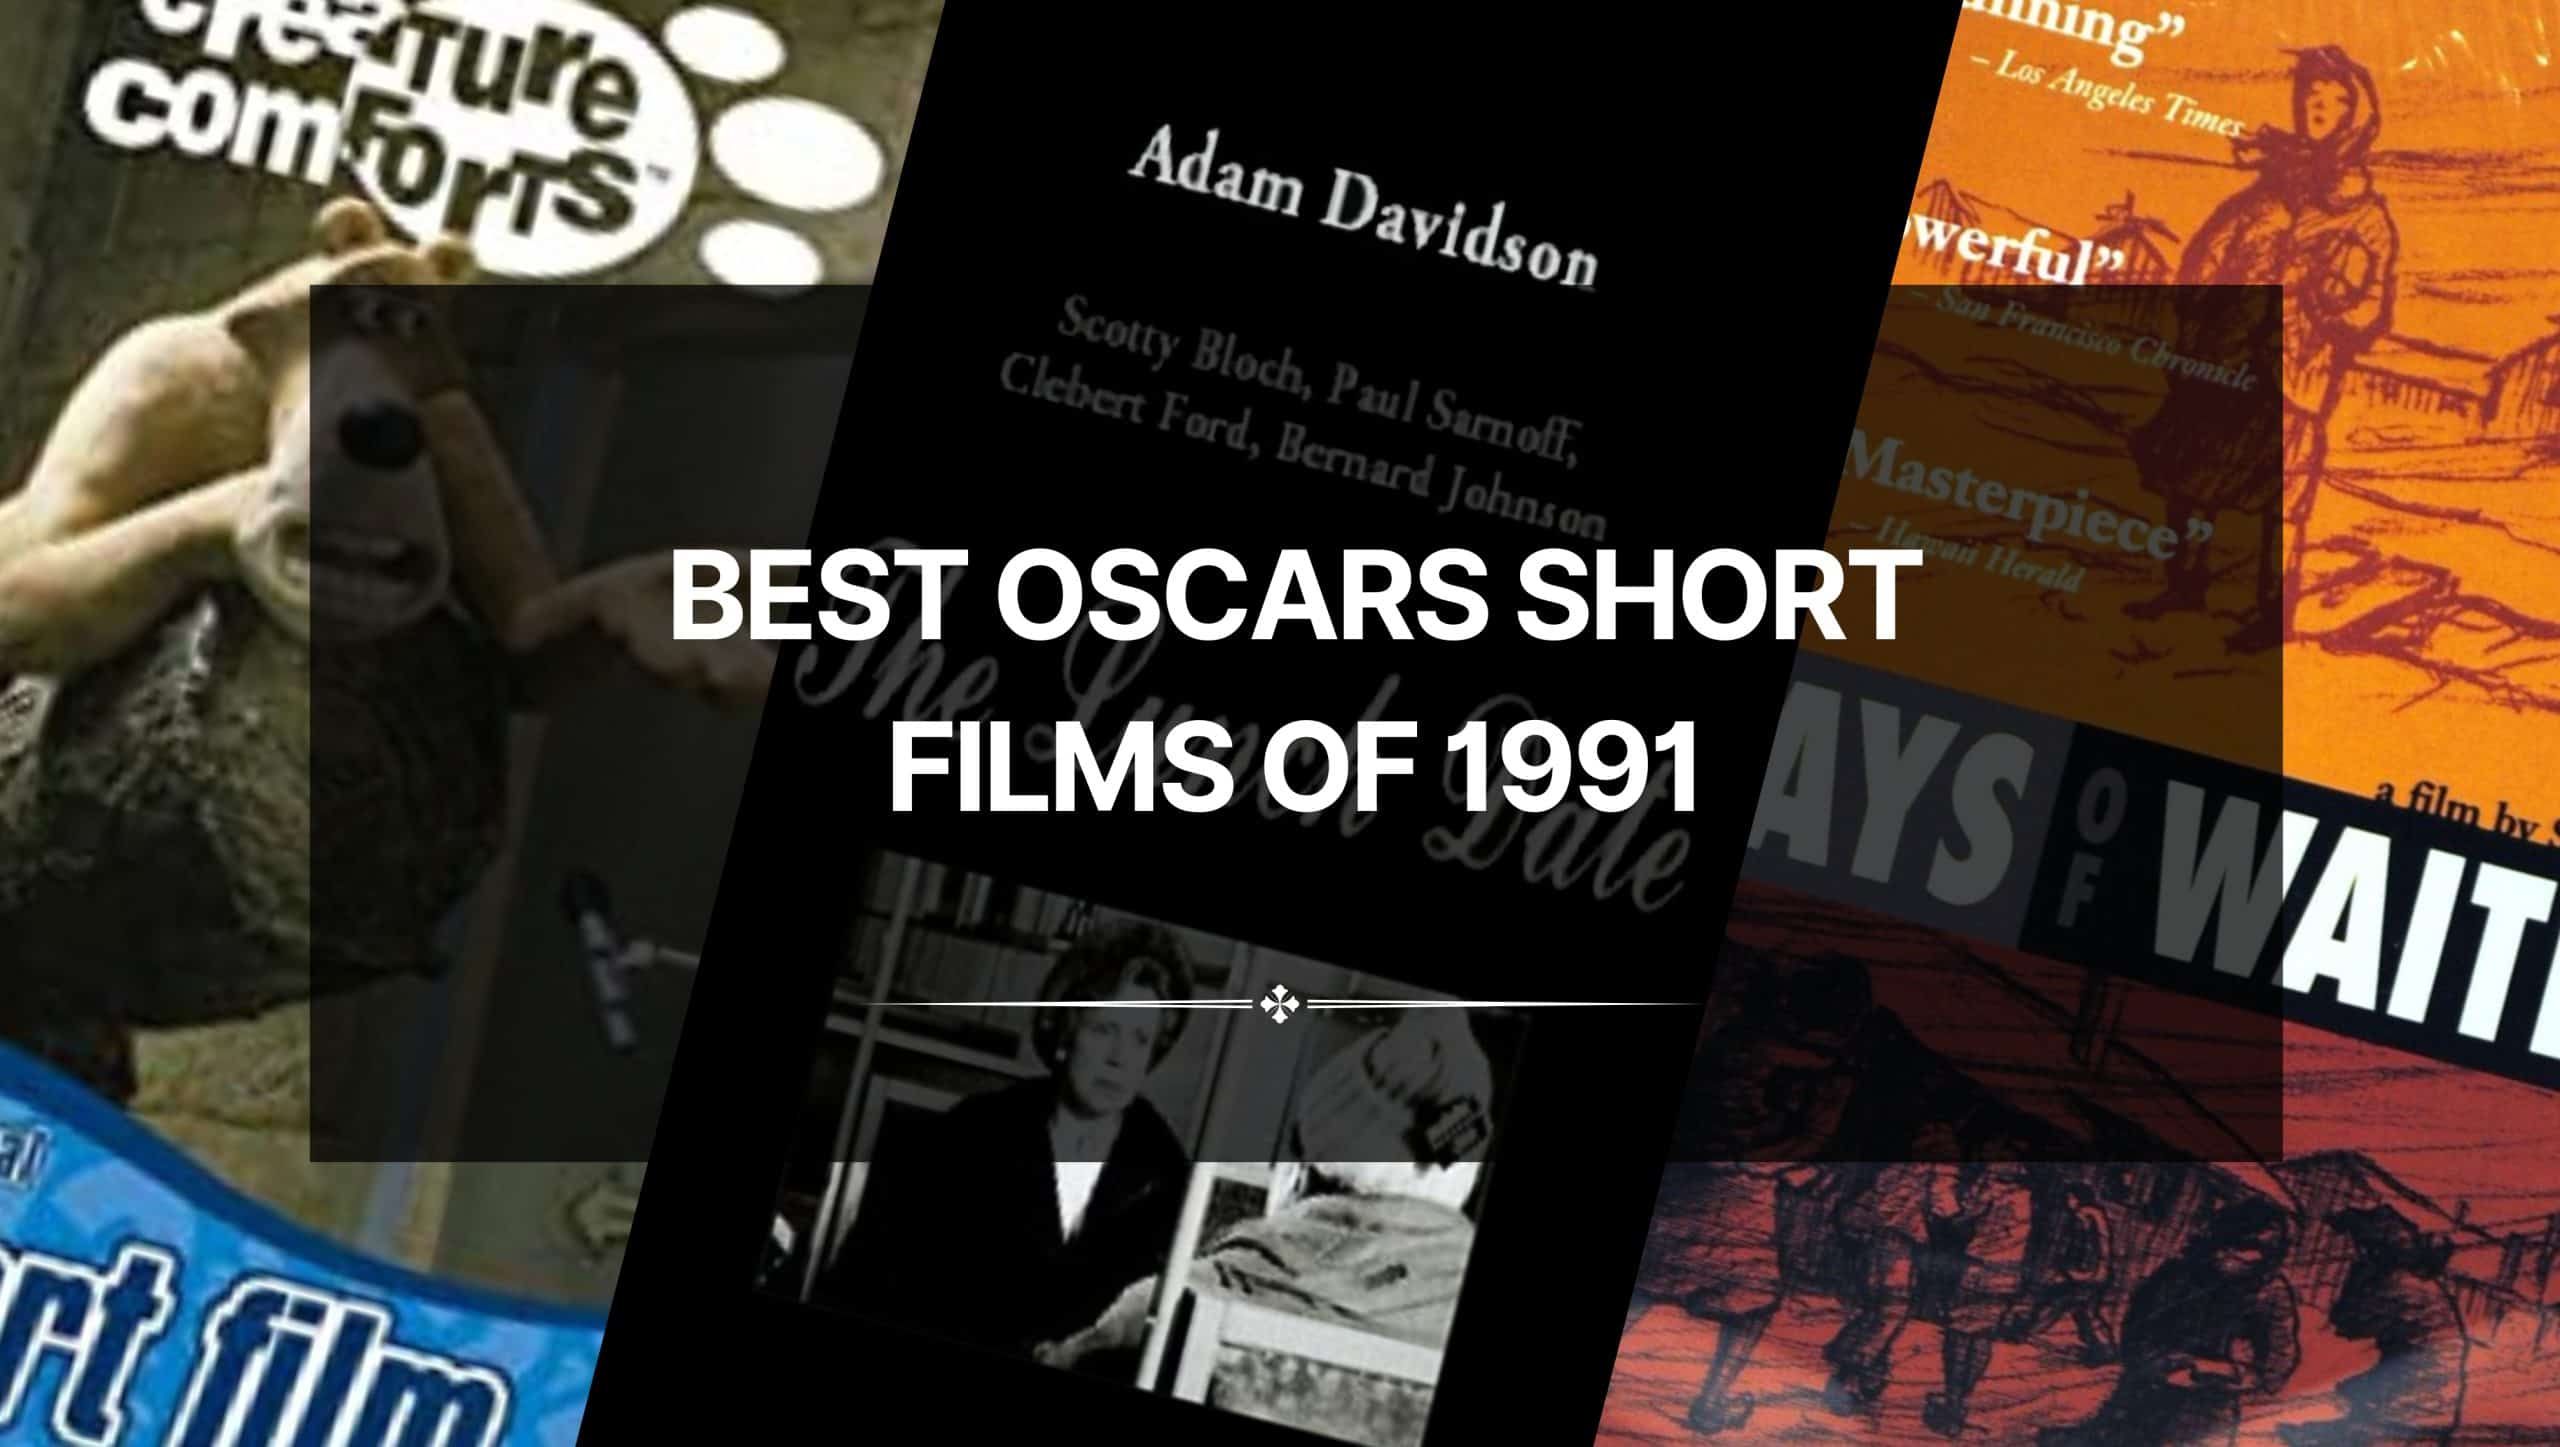 Best Oscars Short Films of 1991